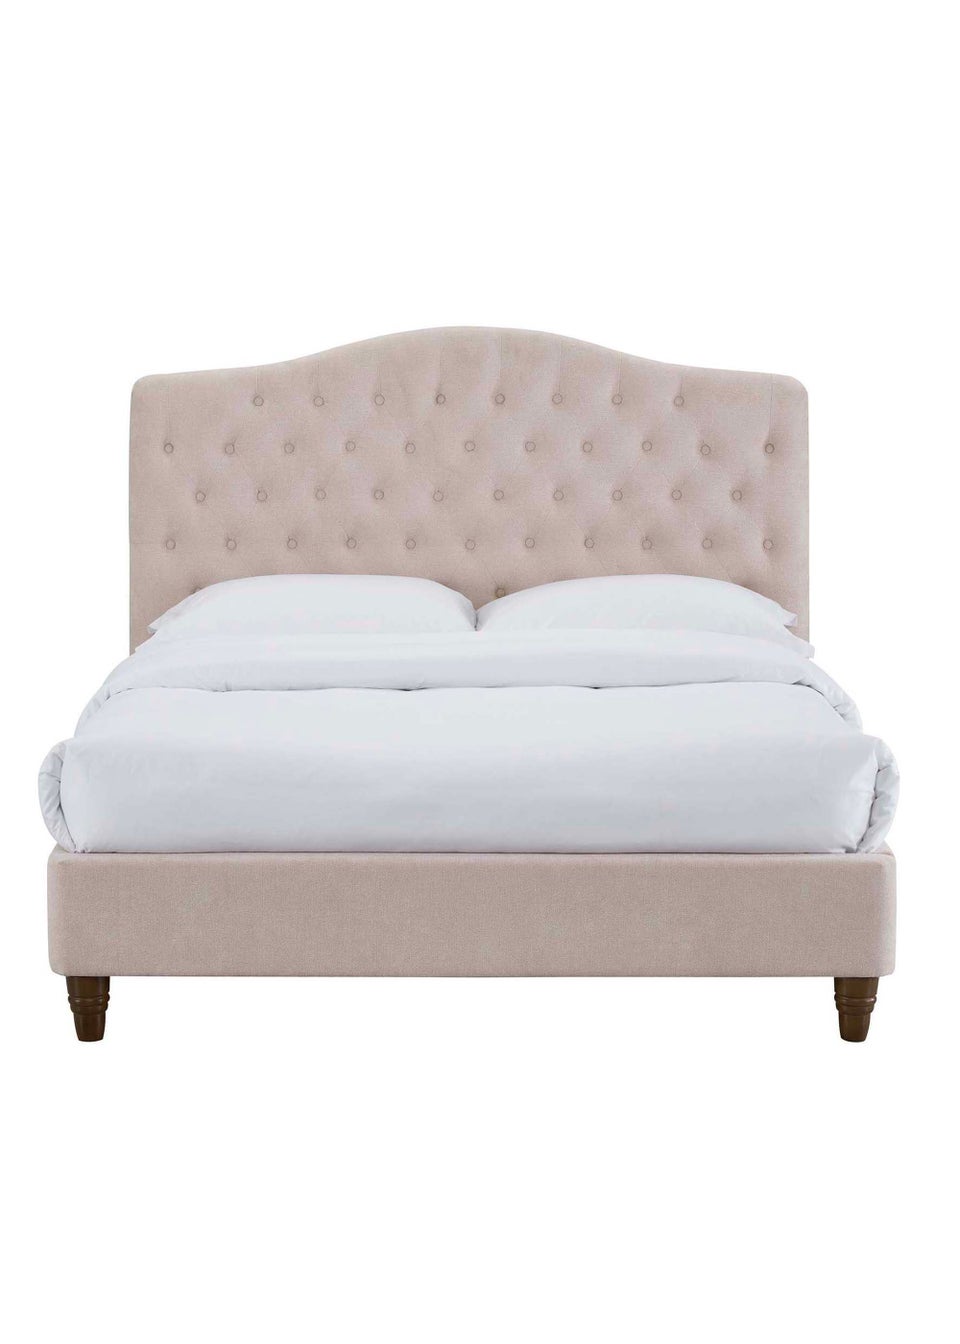 LPD Furniture Sorrento Bed Pink